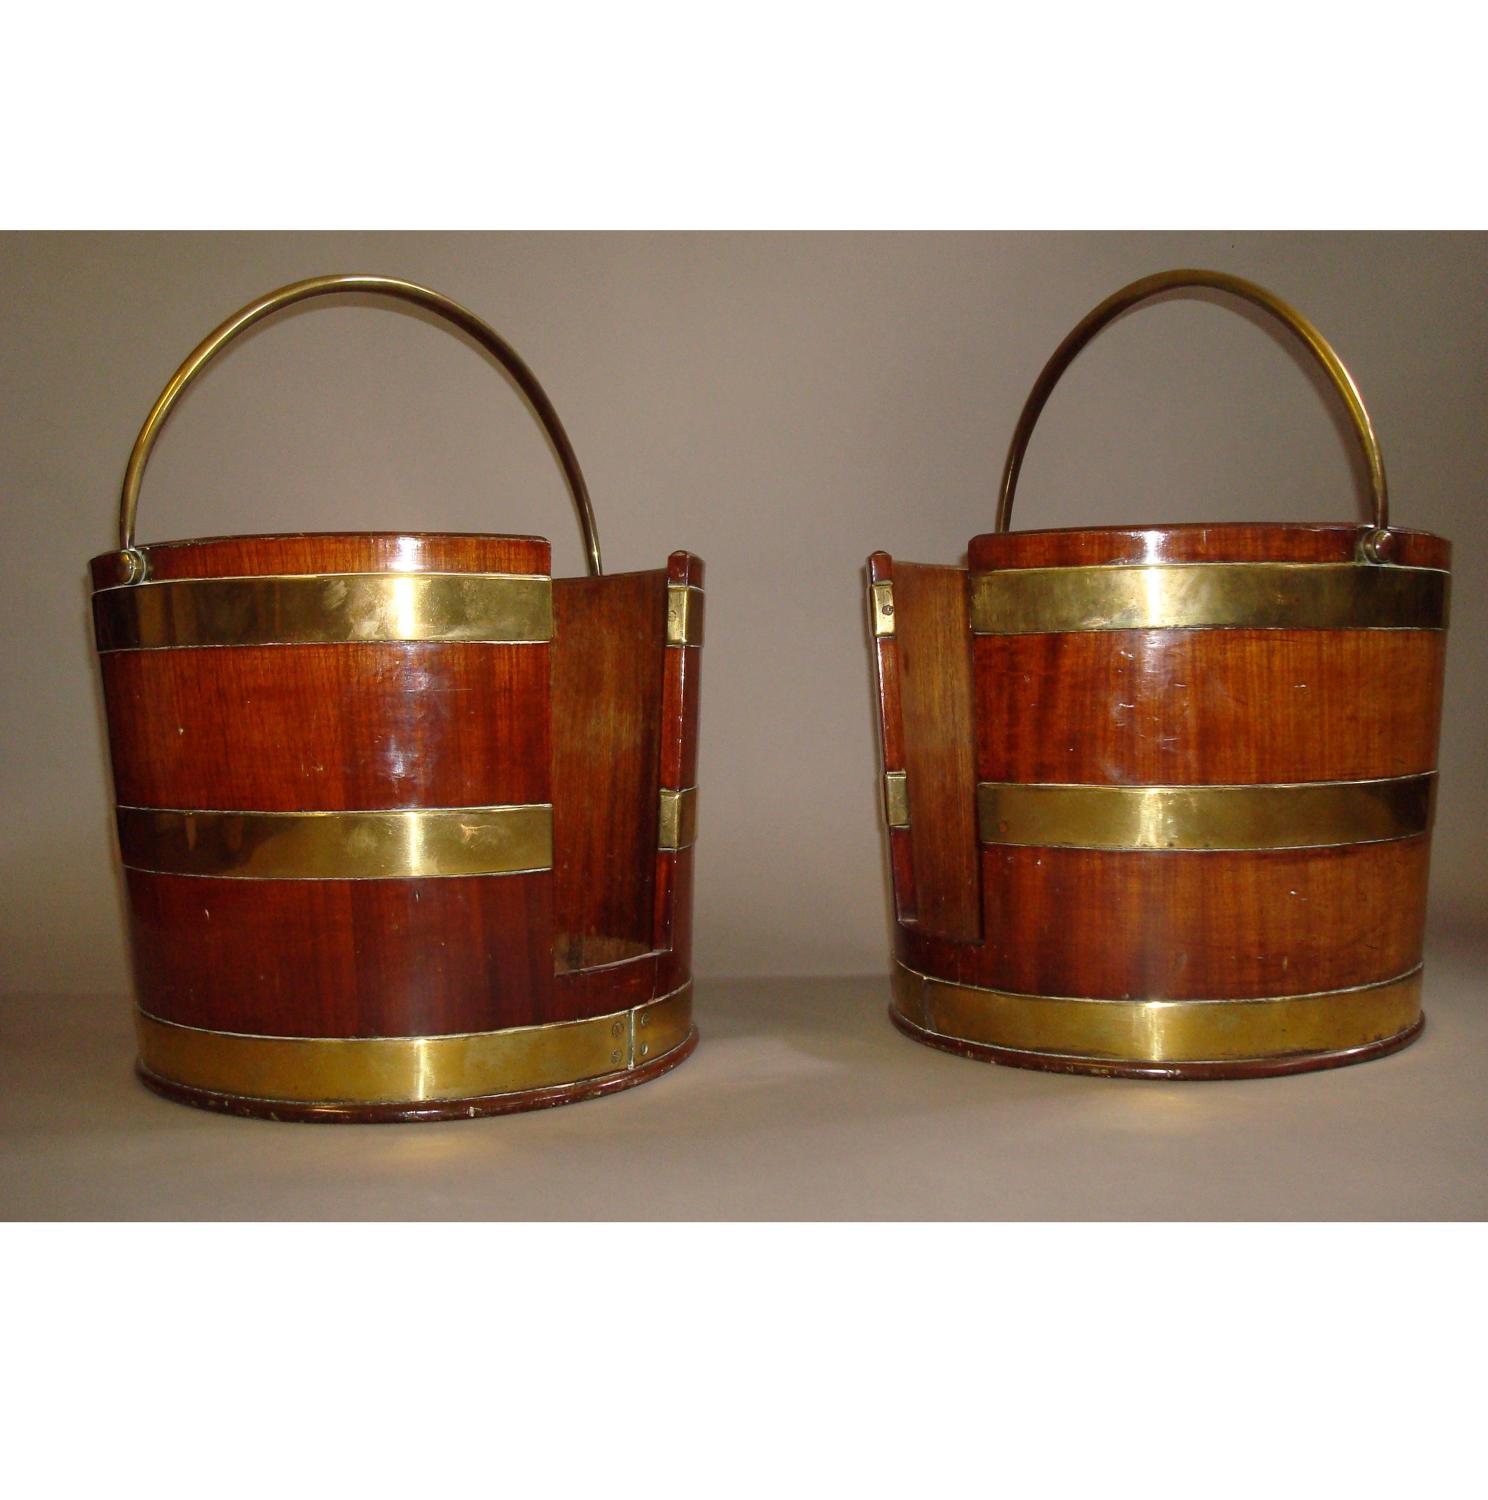 George III brass bound mahogany plate buckets